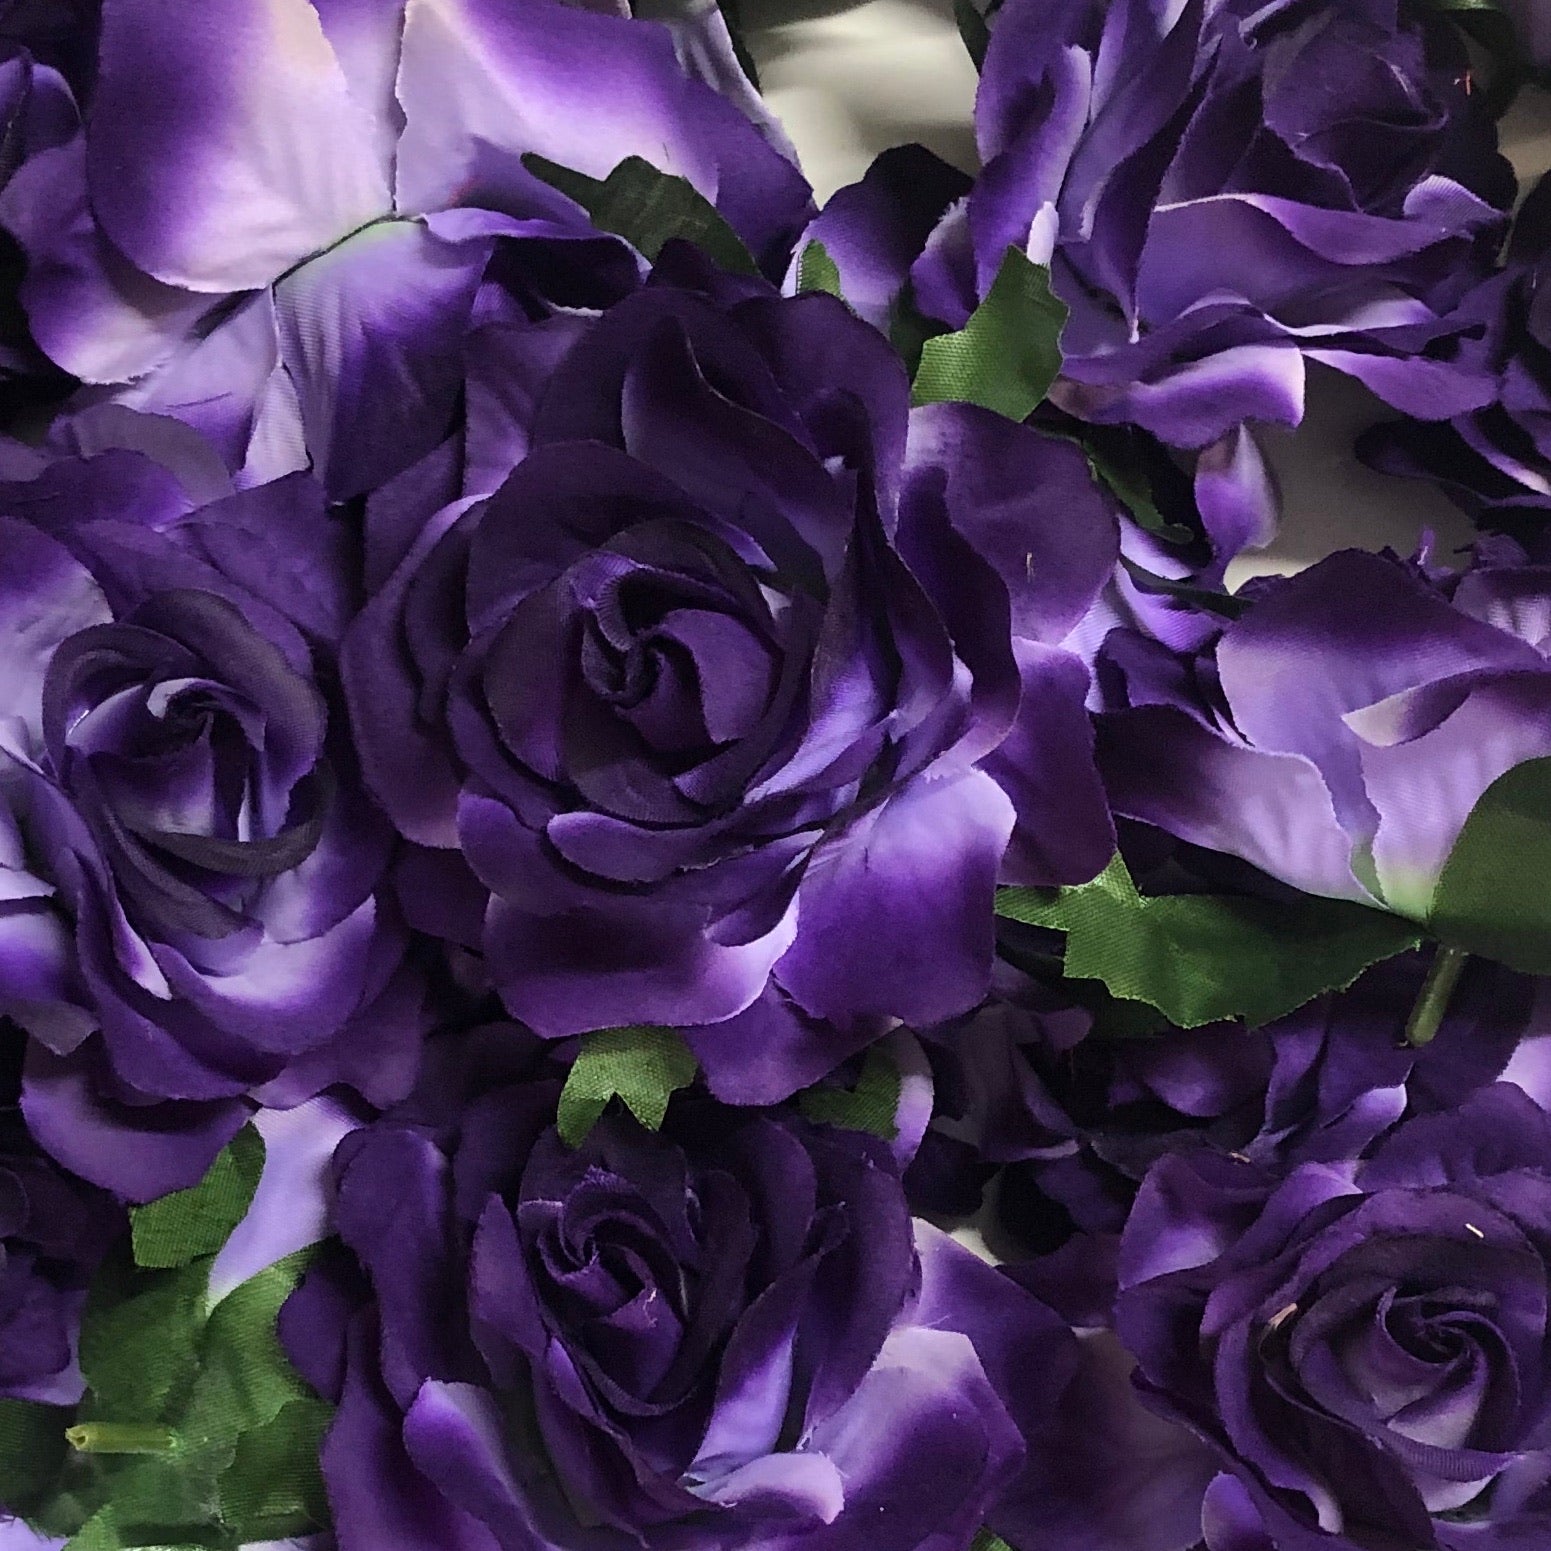 Artificial Silk Flower Head - Dark Purple Rose Style 127 - 1pc